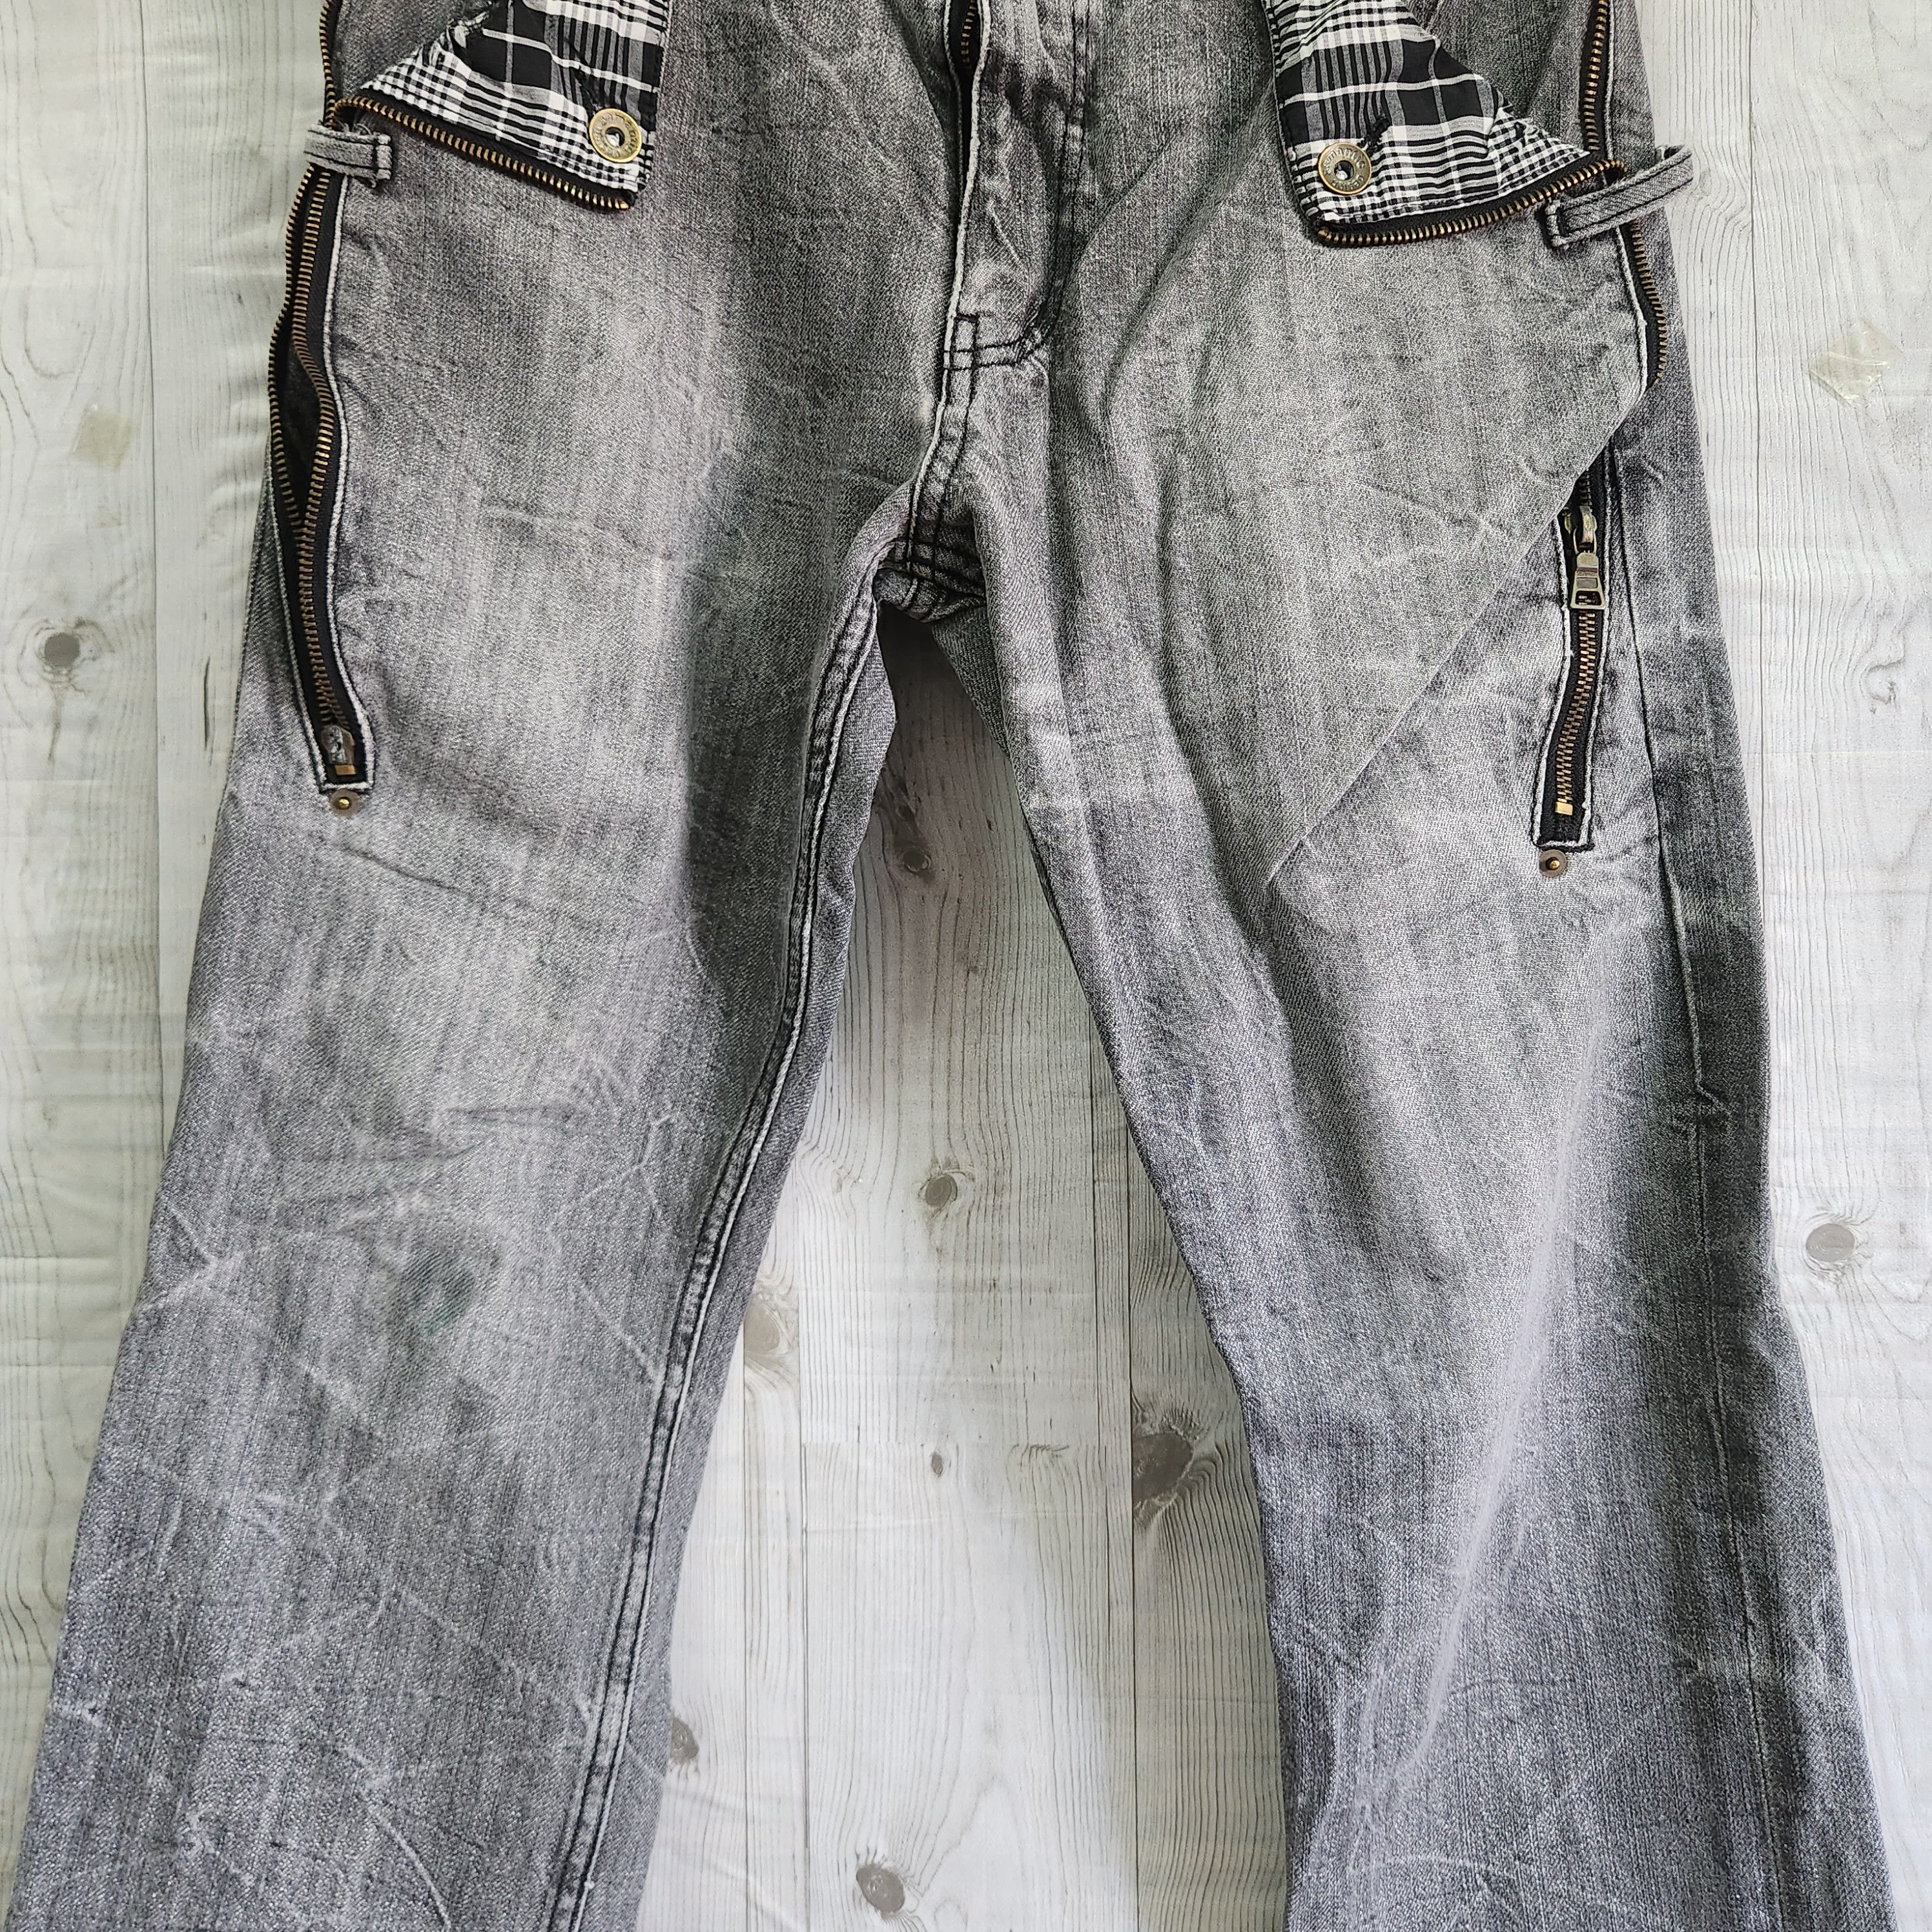 Semantic Design Hysteric Glamour Japan Denim Jeans - 15